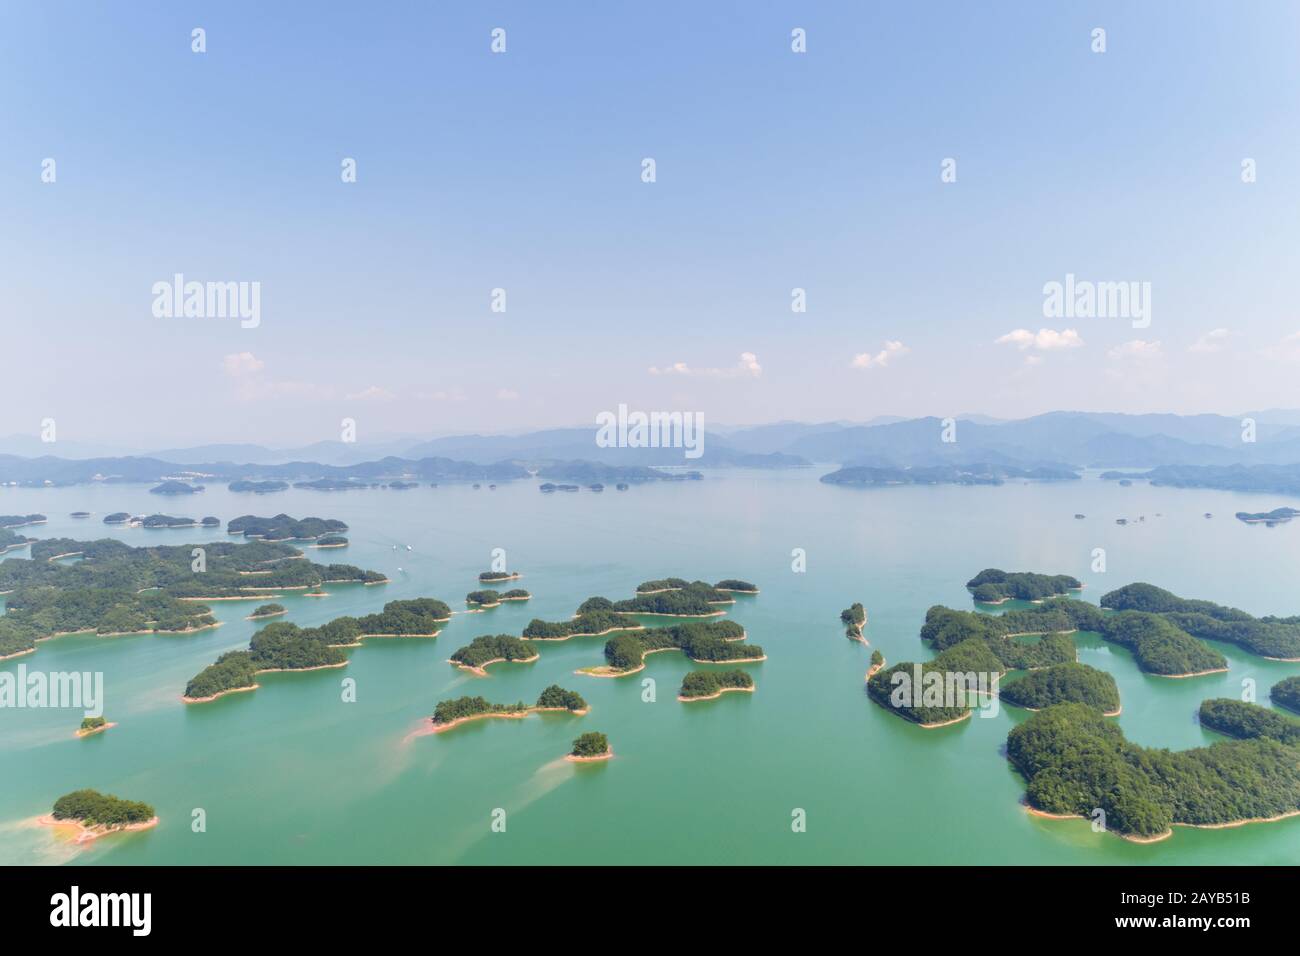 aerial view of hangzhou thousand island lake Stock Photo